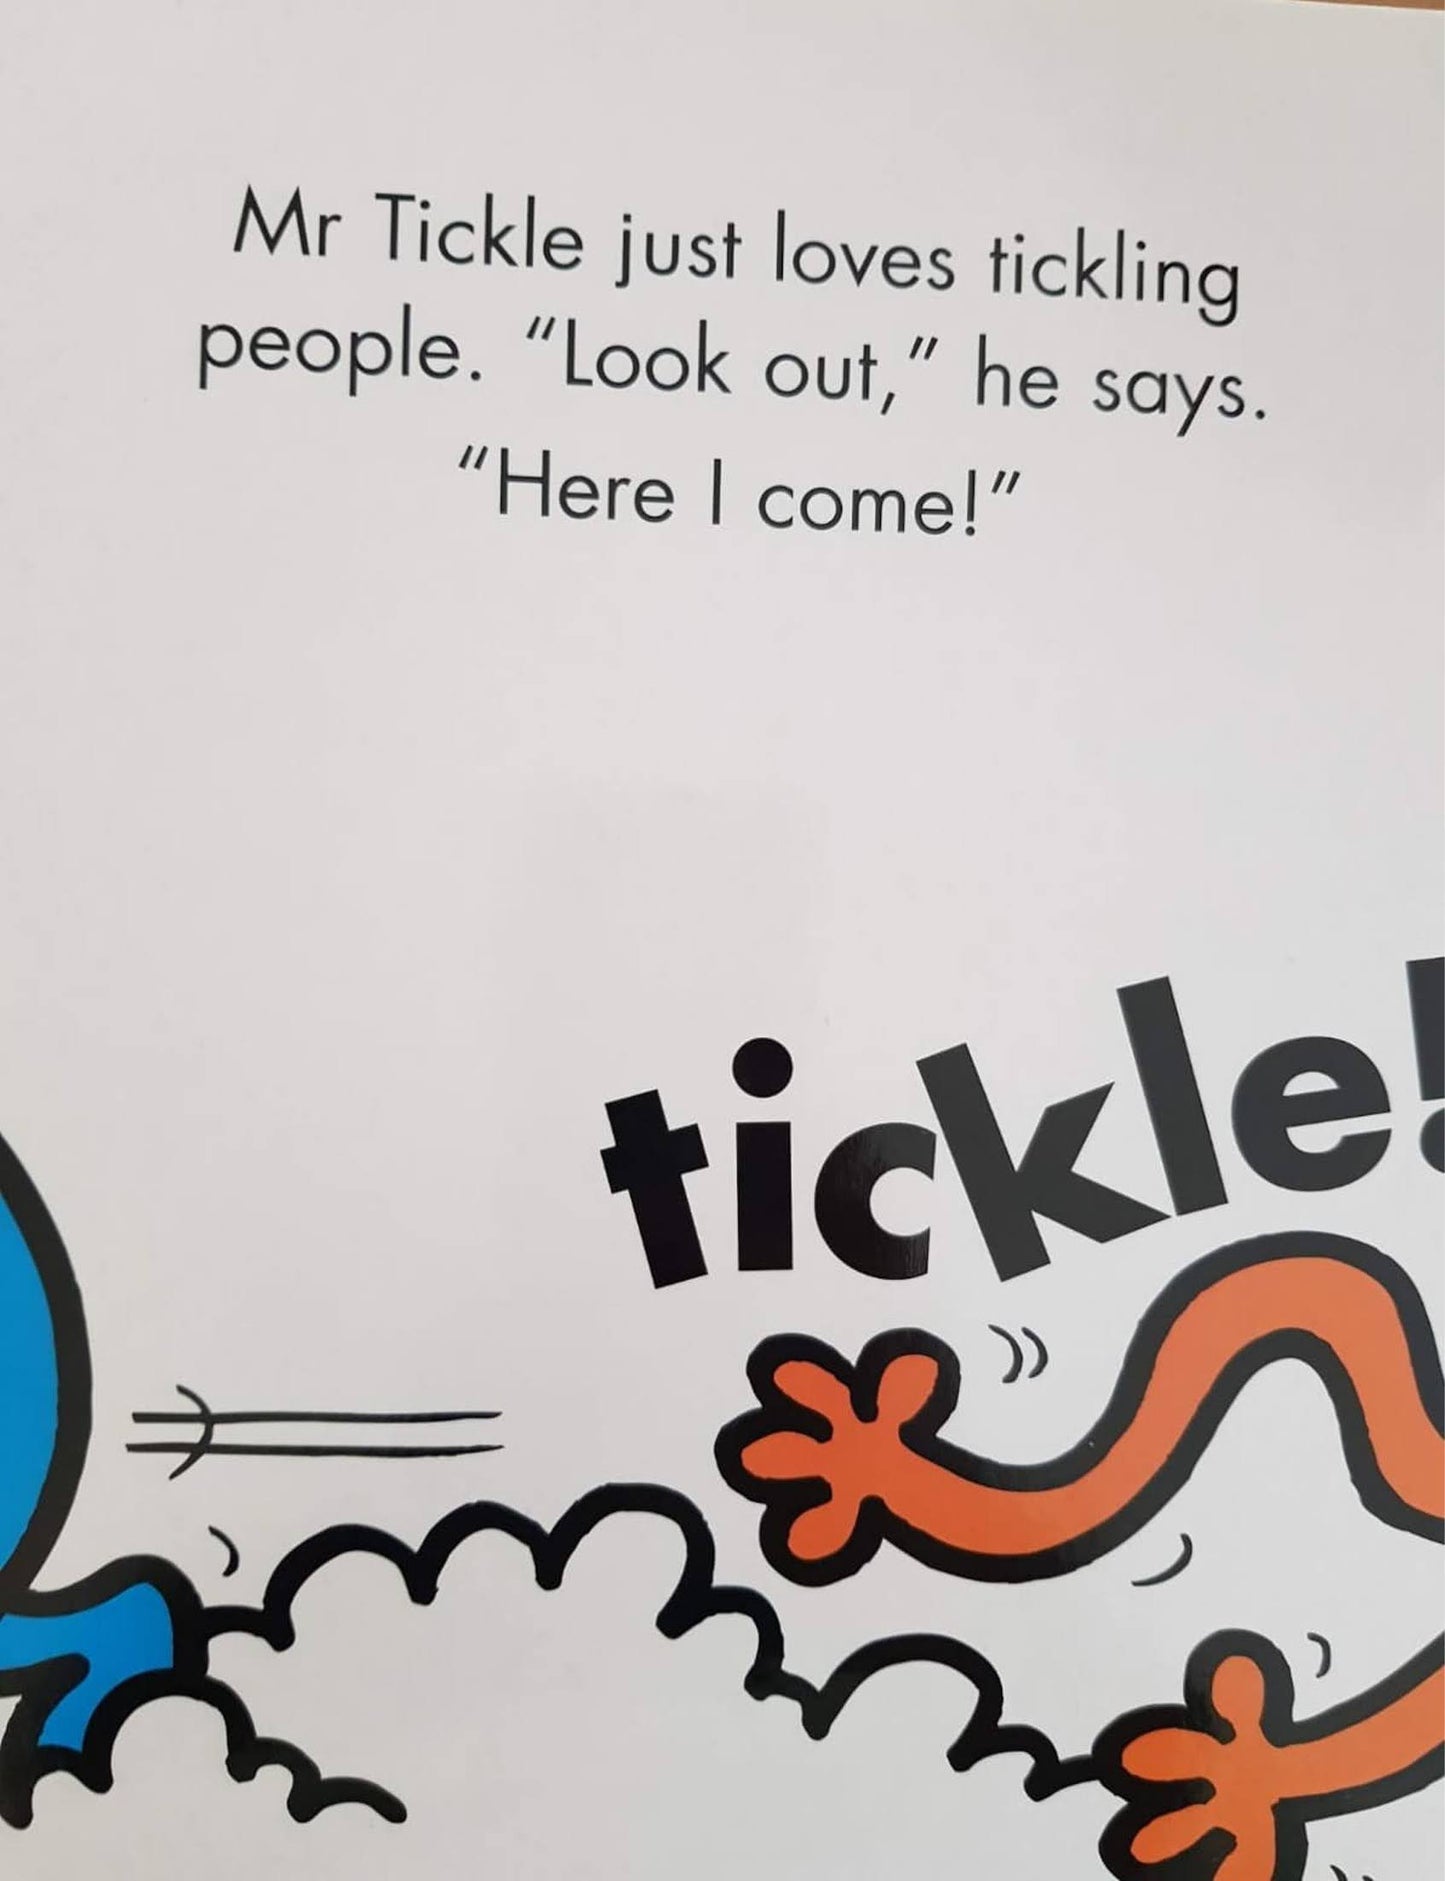 MR. TICKLE'S Tickly Day Very Good Mr Men/Little Miss  (6203873231033)